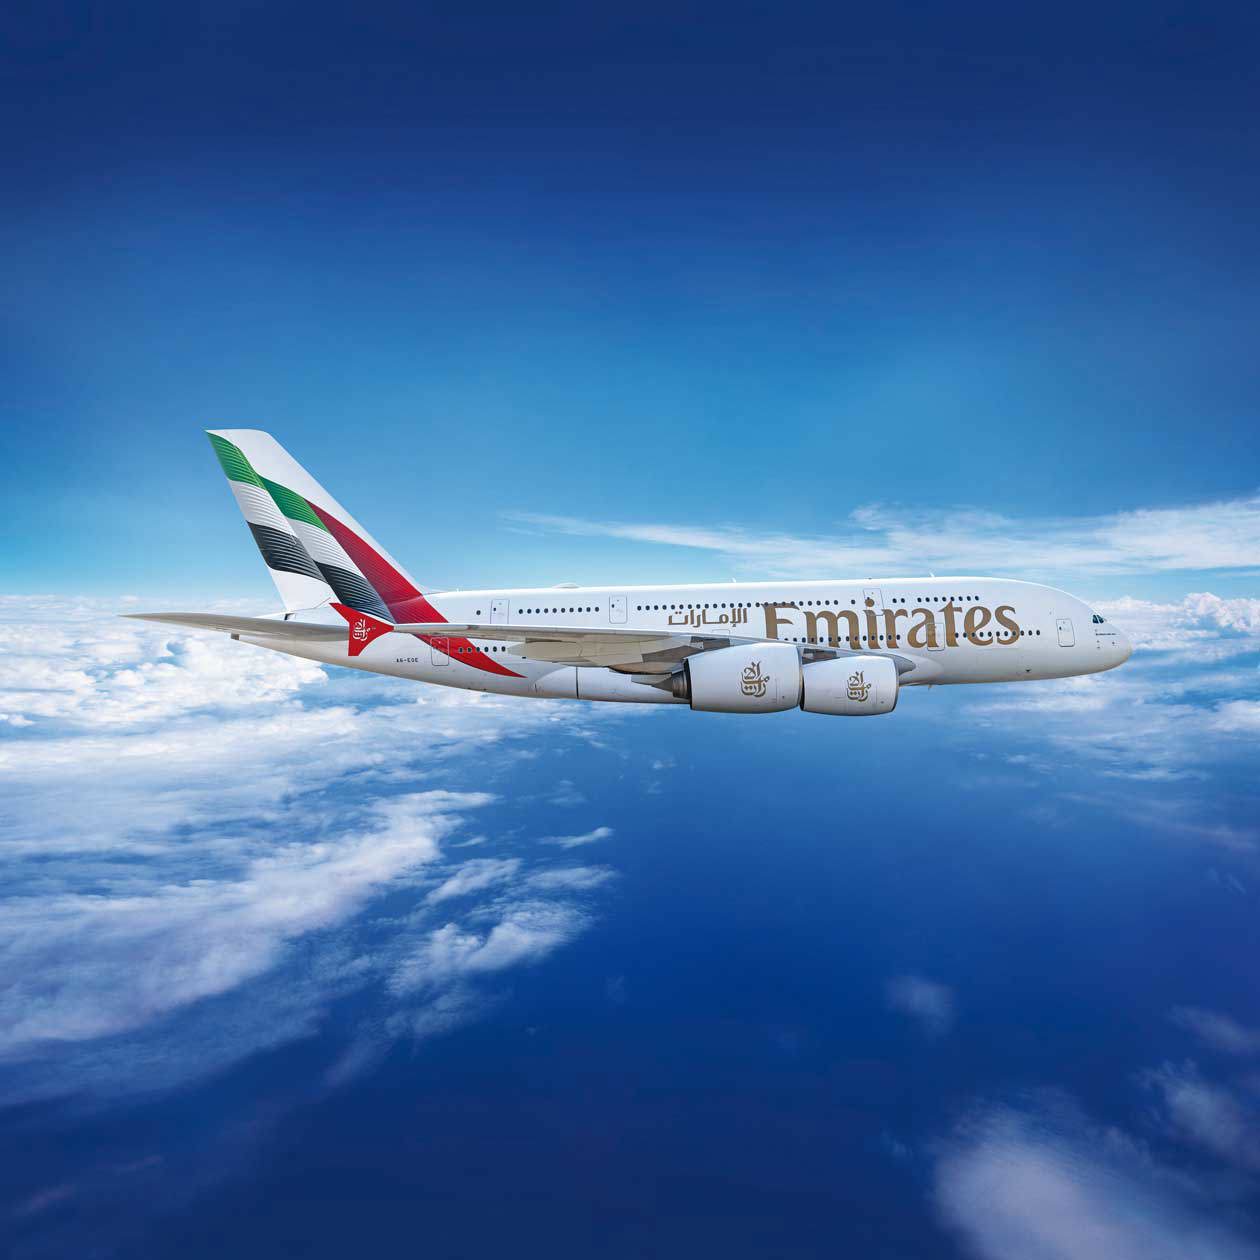  A380 Emirates Copyright © Ufficio Stampa Emirates Airlines / The Emirates Group